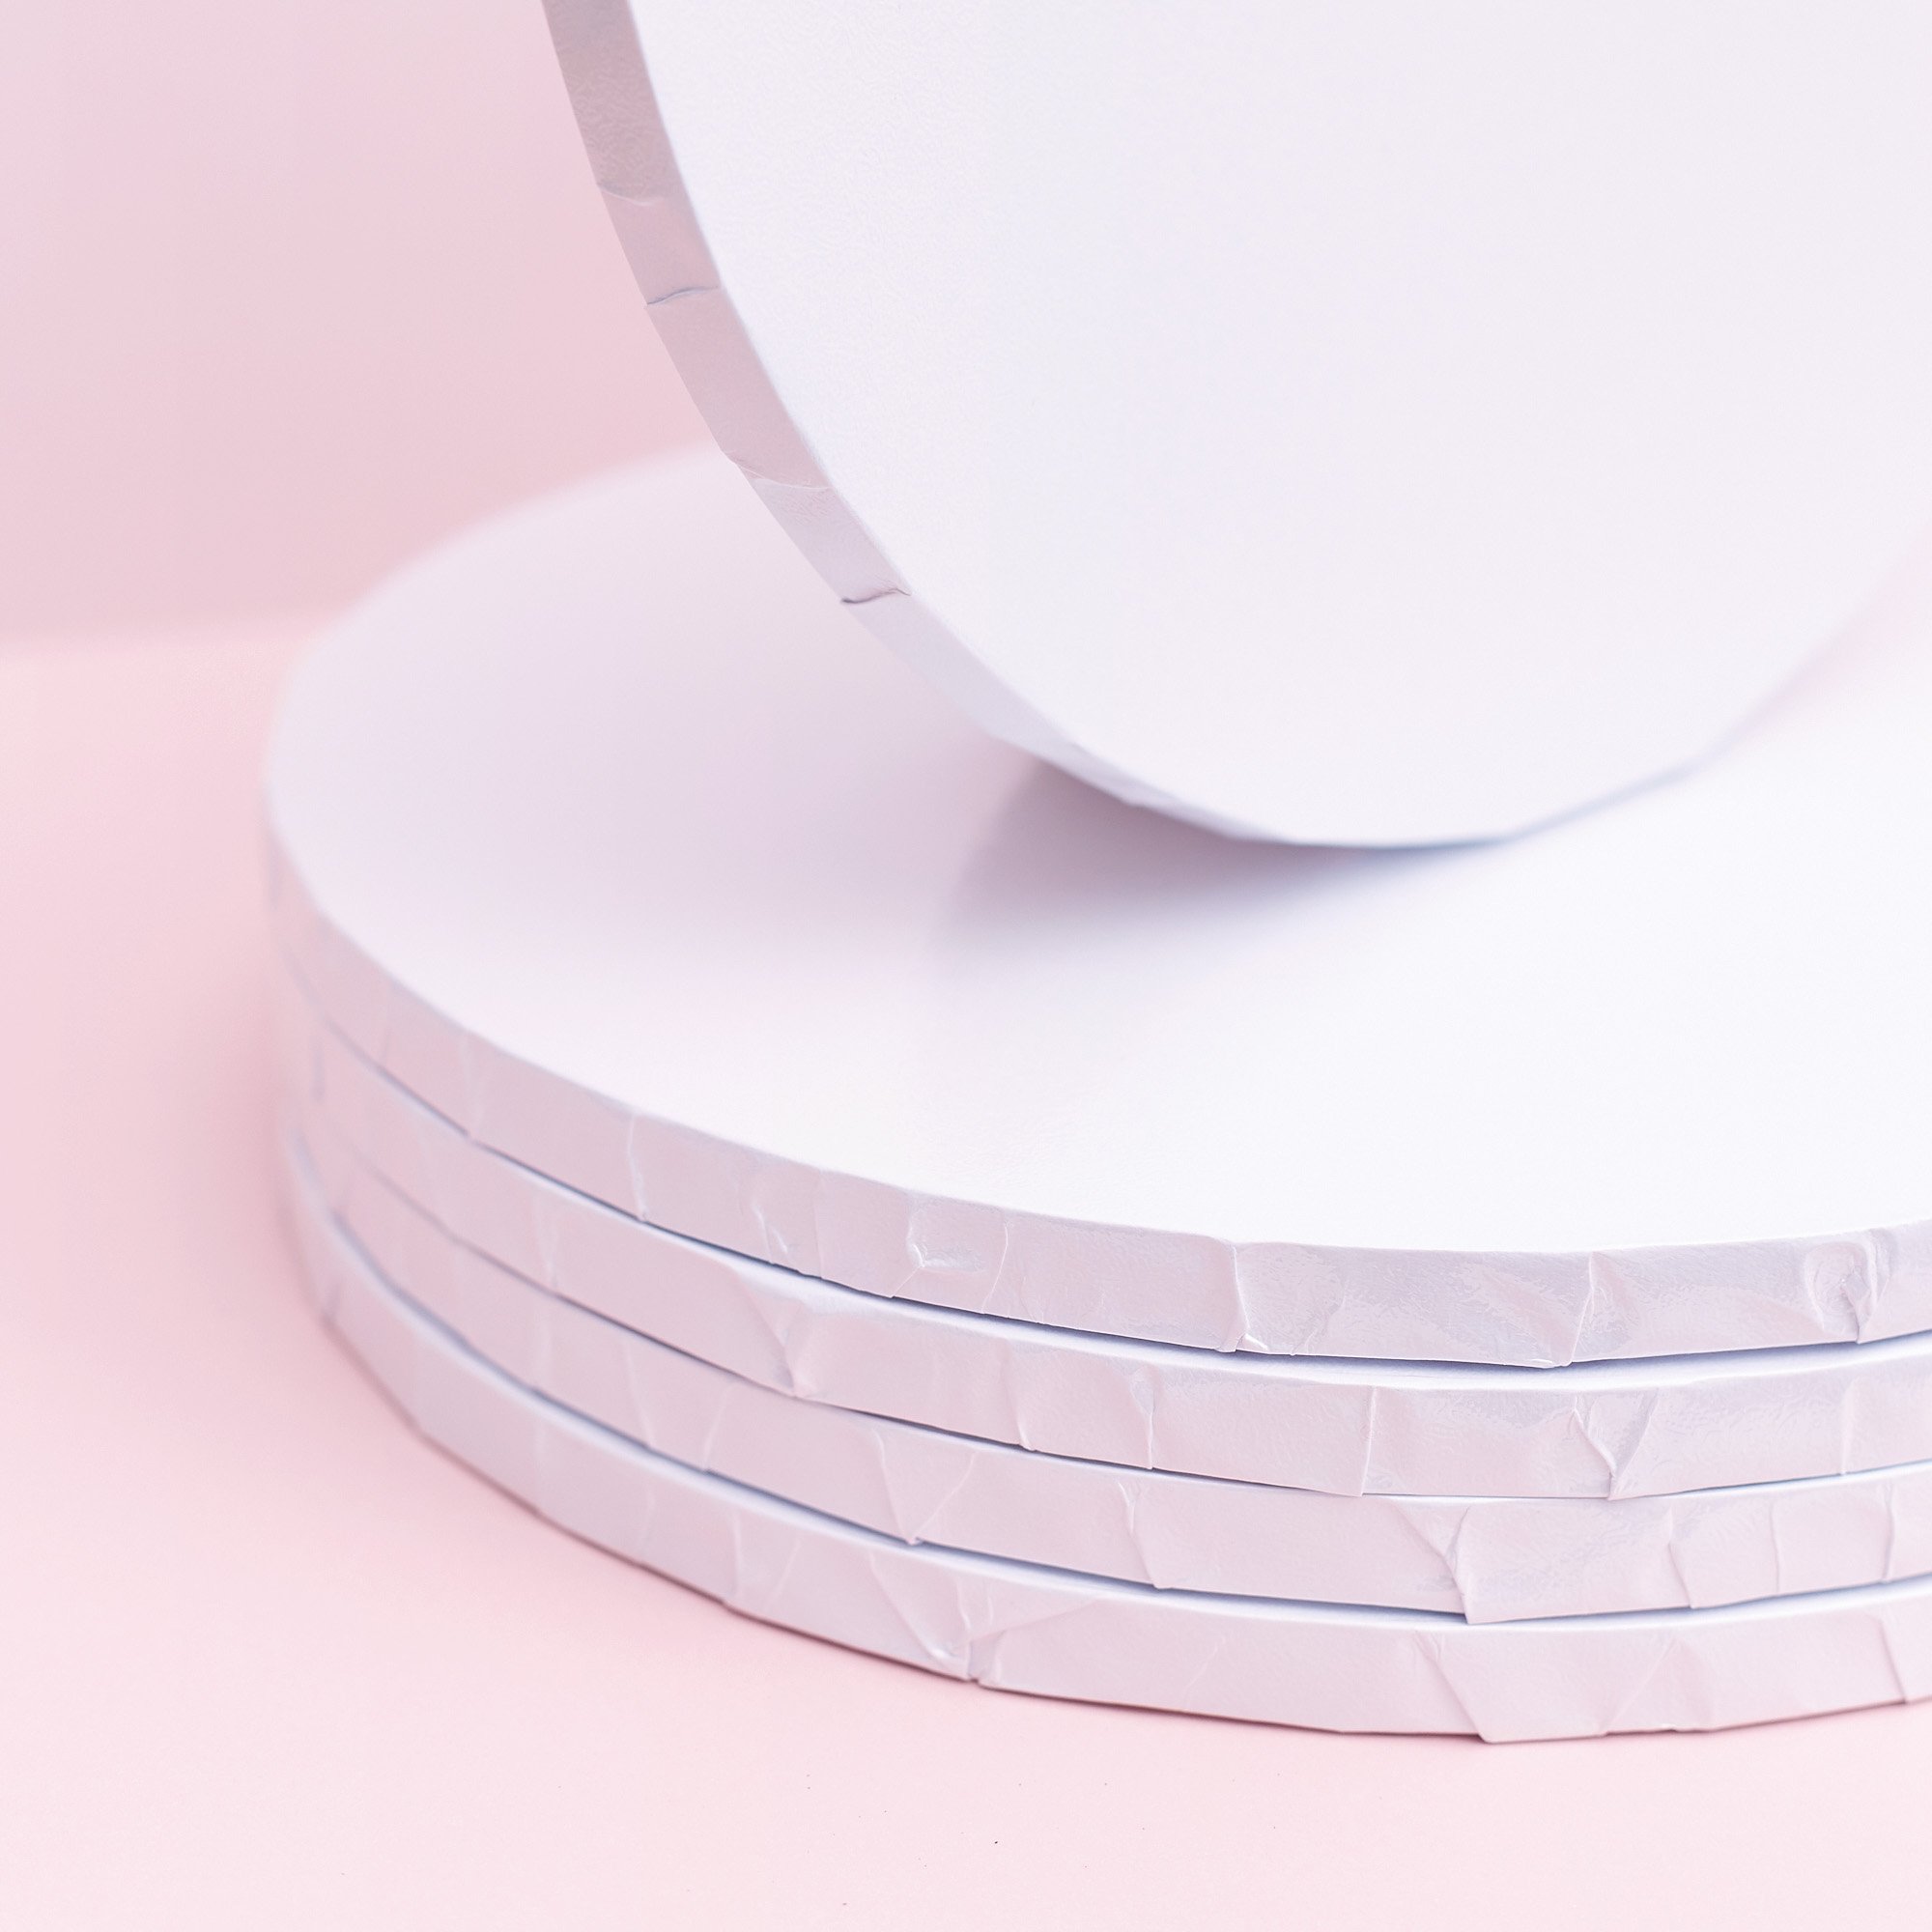 the-baked-studio-white-gloss-drum-cake-boards-pack-of-5-cake-decorating-2.jpg